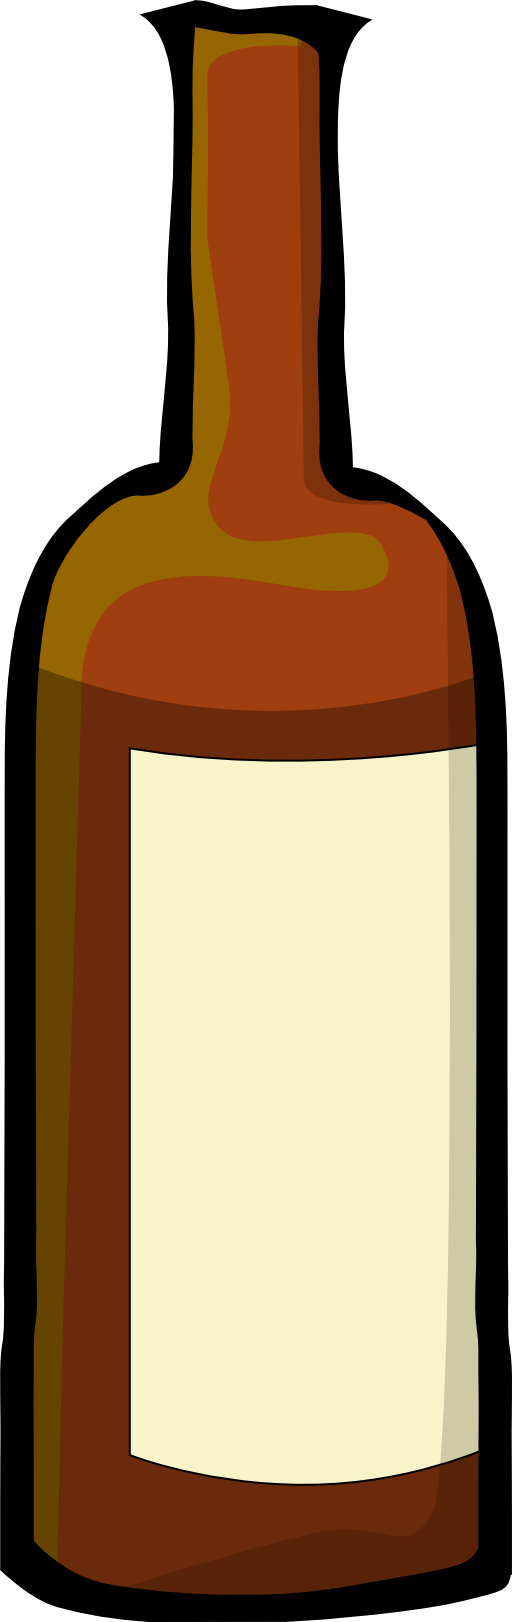 Wine Bottle Clip Art Image